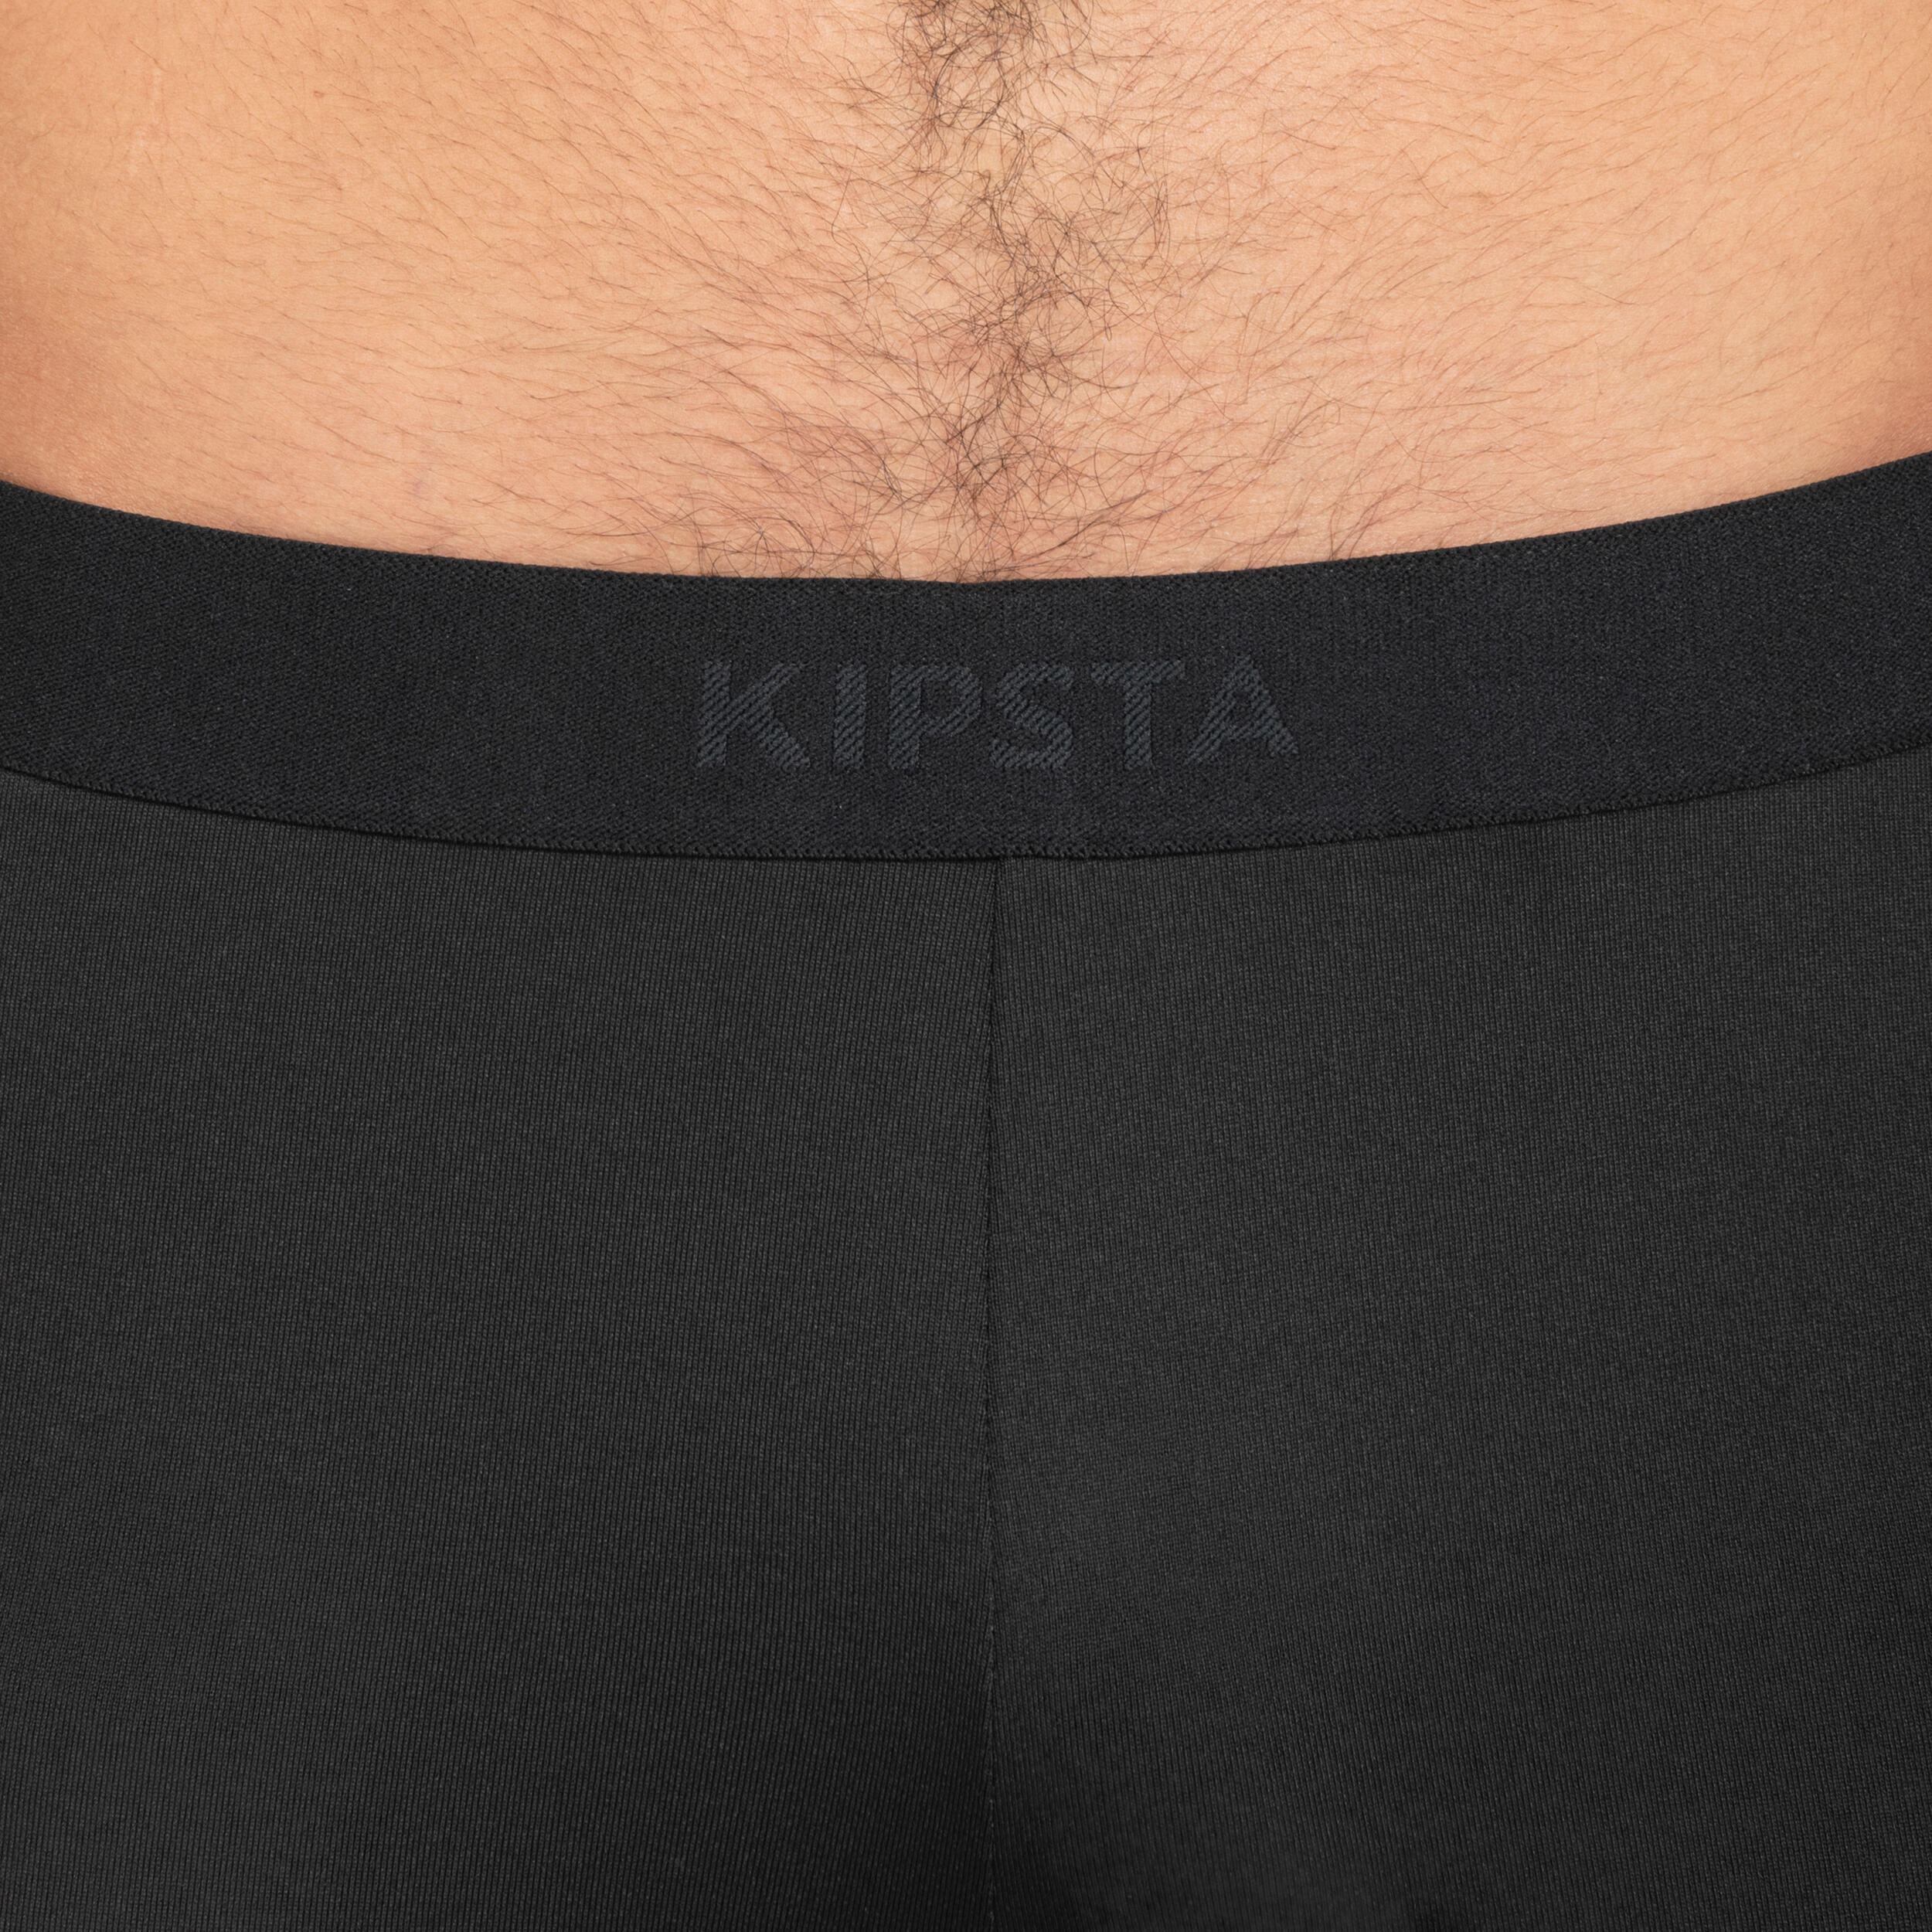 Collant thermique - Keepcomfort 100 noir - KIPSTA